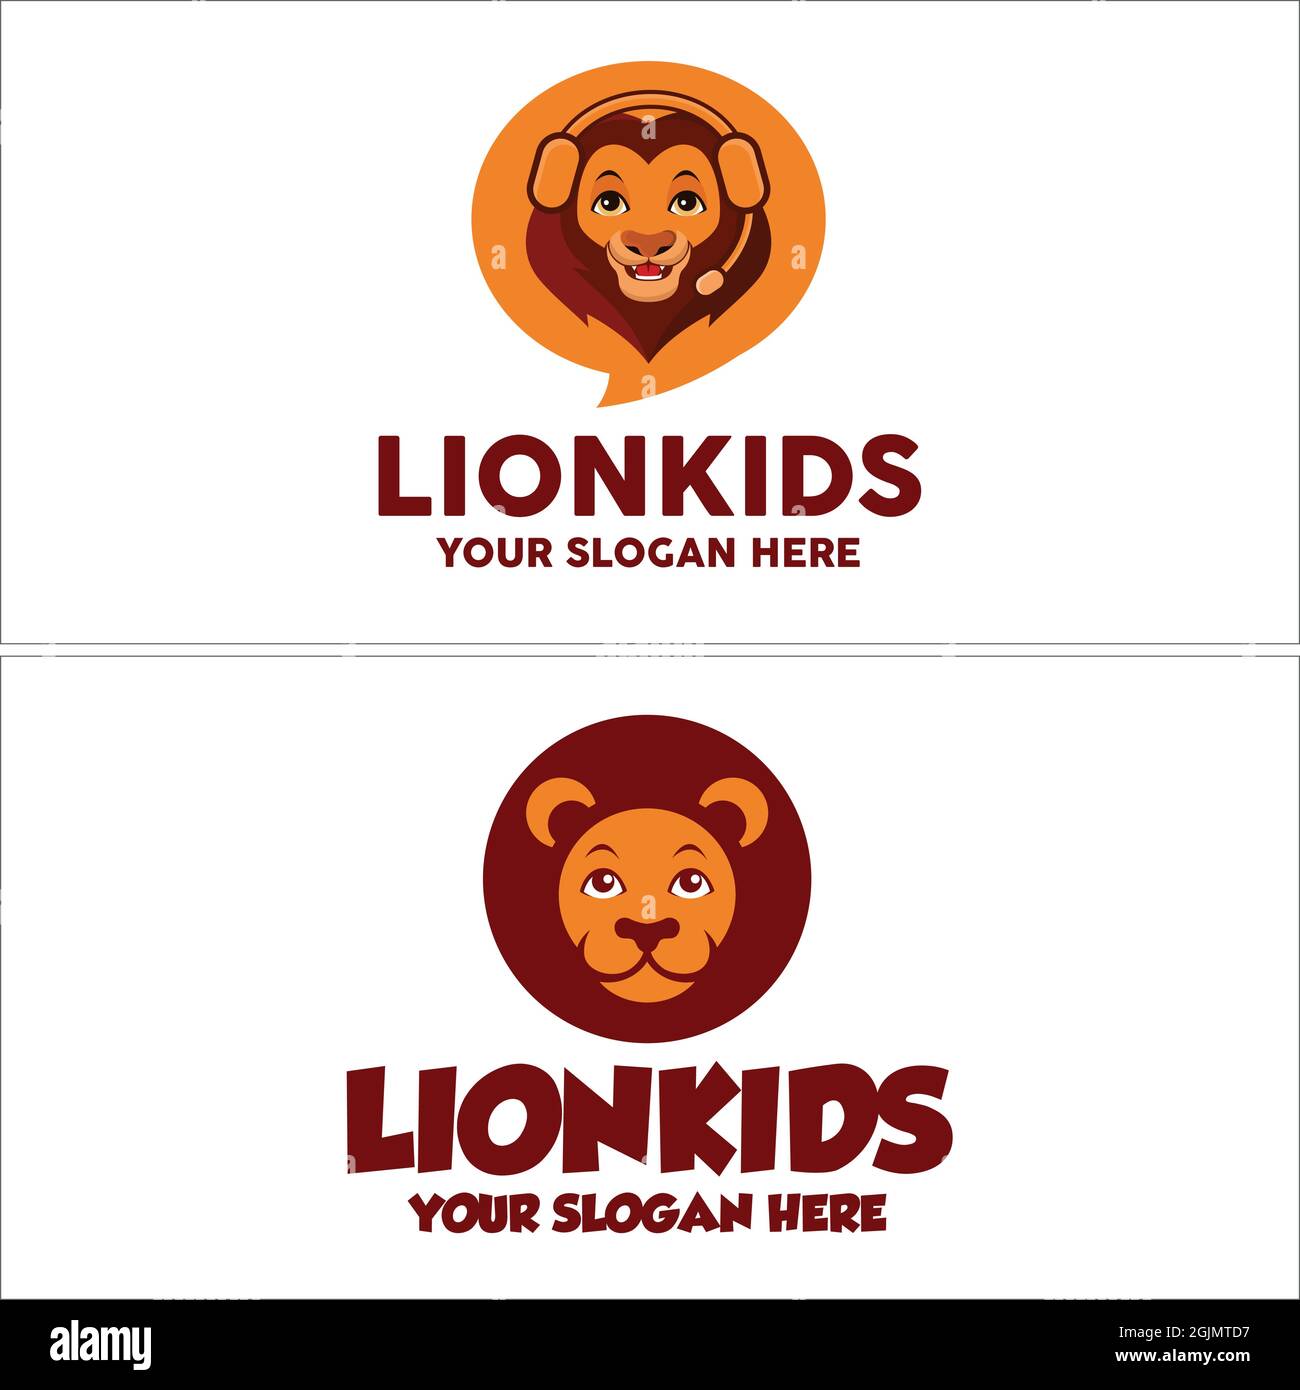 Lion kids cartoon character logo design Stock Vector Image & Art - Alamy